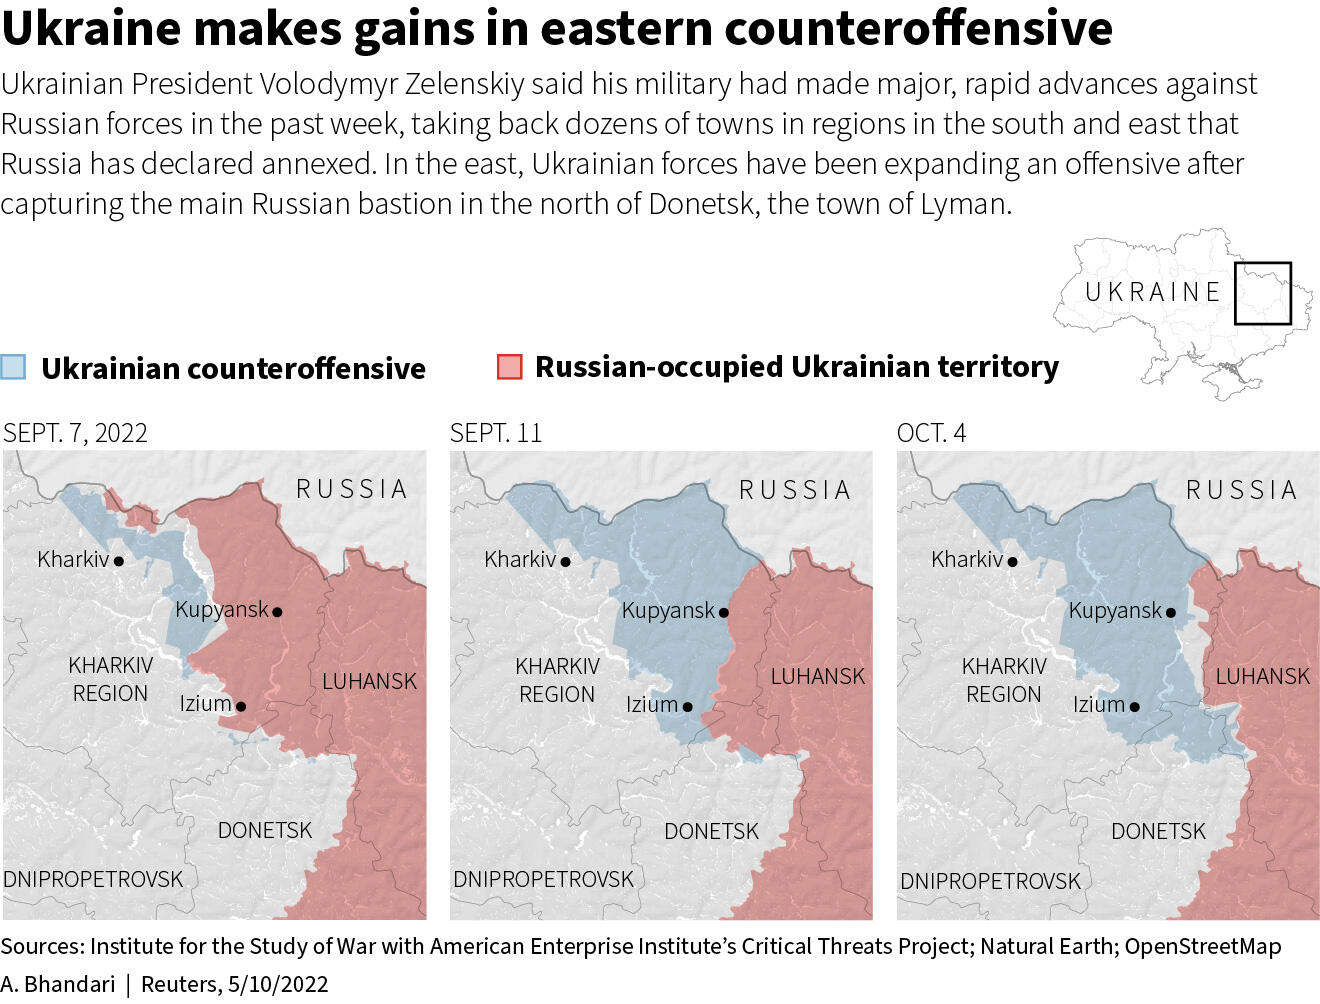 Ukraine counteroffensive